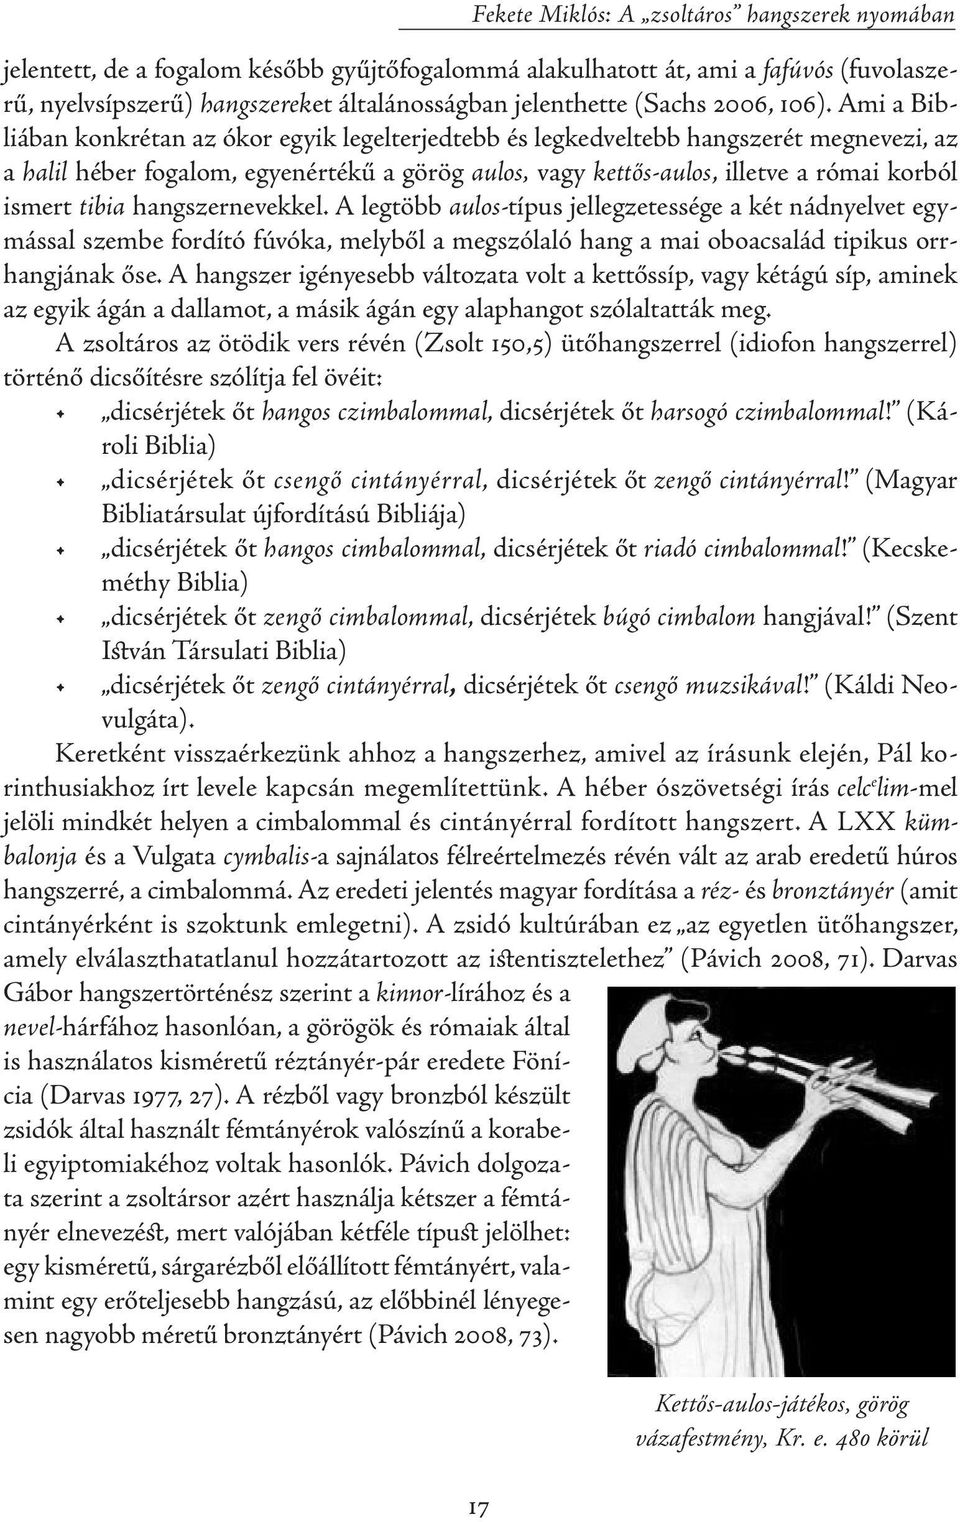 THEOLOGIA reformata transylvanica - PDF Free Download